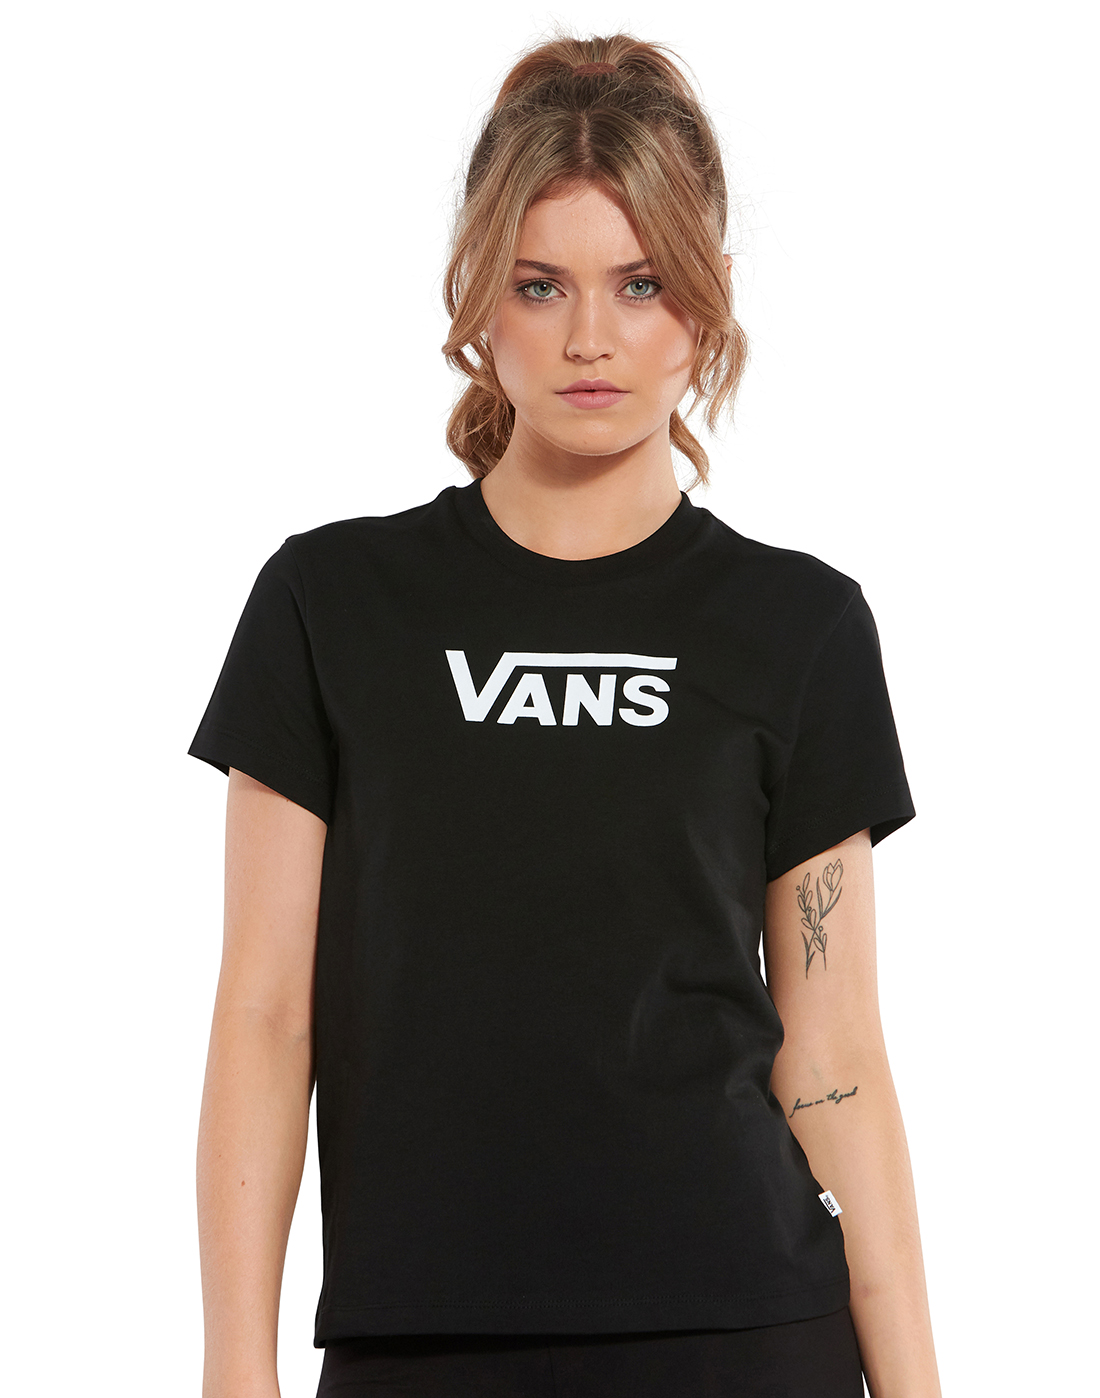 vans black t shirt womens